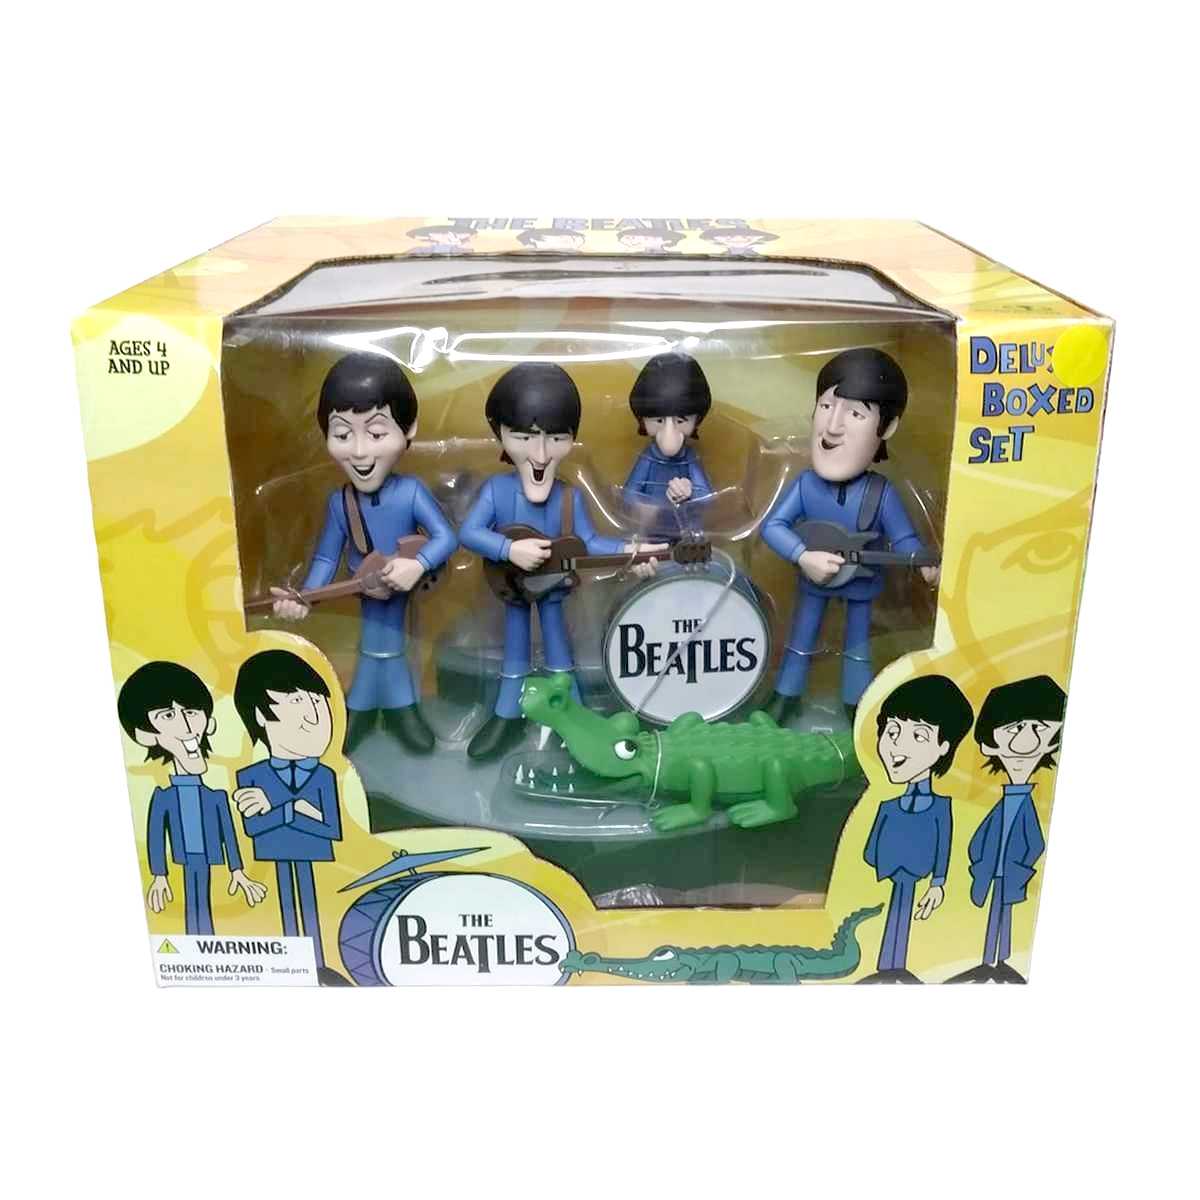 The Beatles Cartoon Deluxe Boxed set Paul McCartney George Harrison Ringo Starr John Lennon